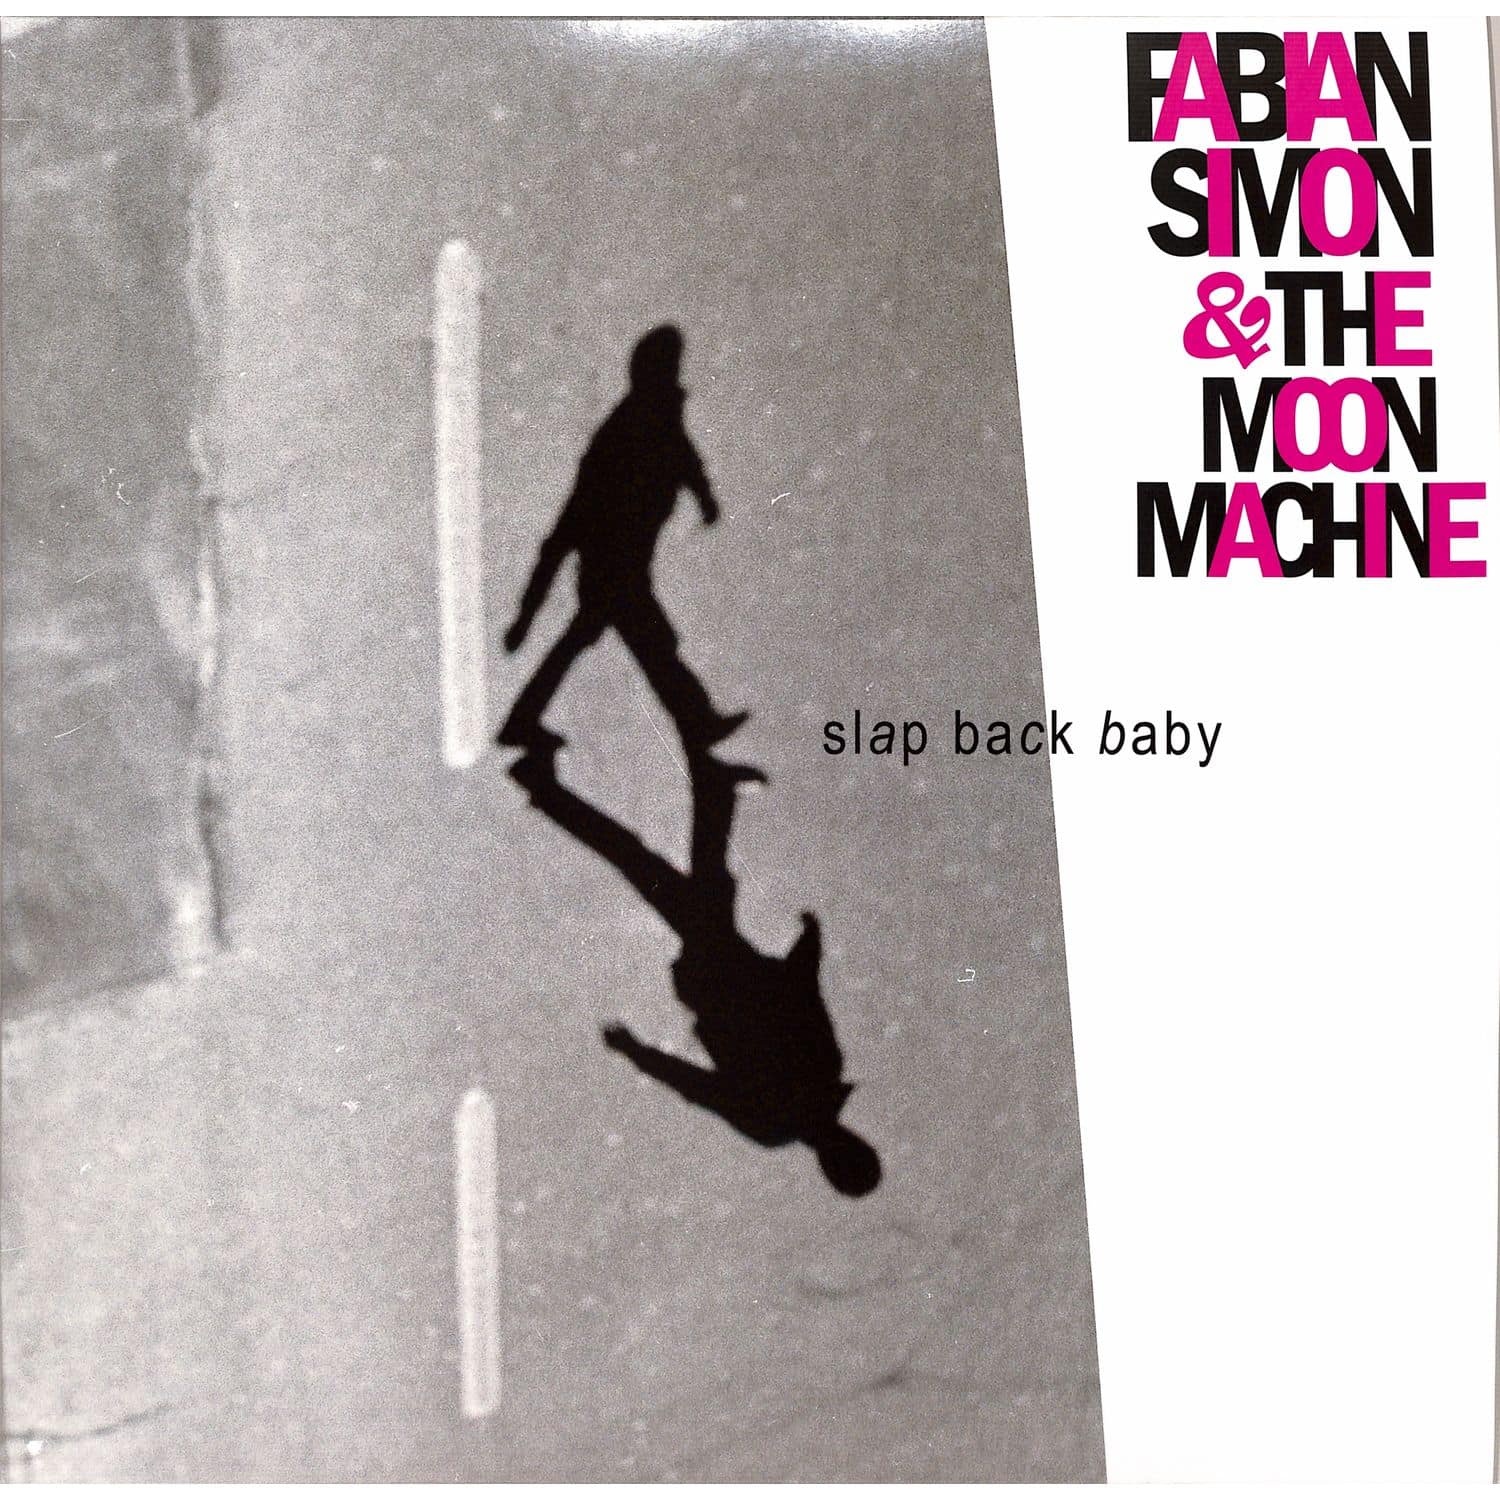 Fabian Simon & The Moon Machine - SLAP BACK BABY 